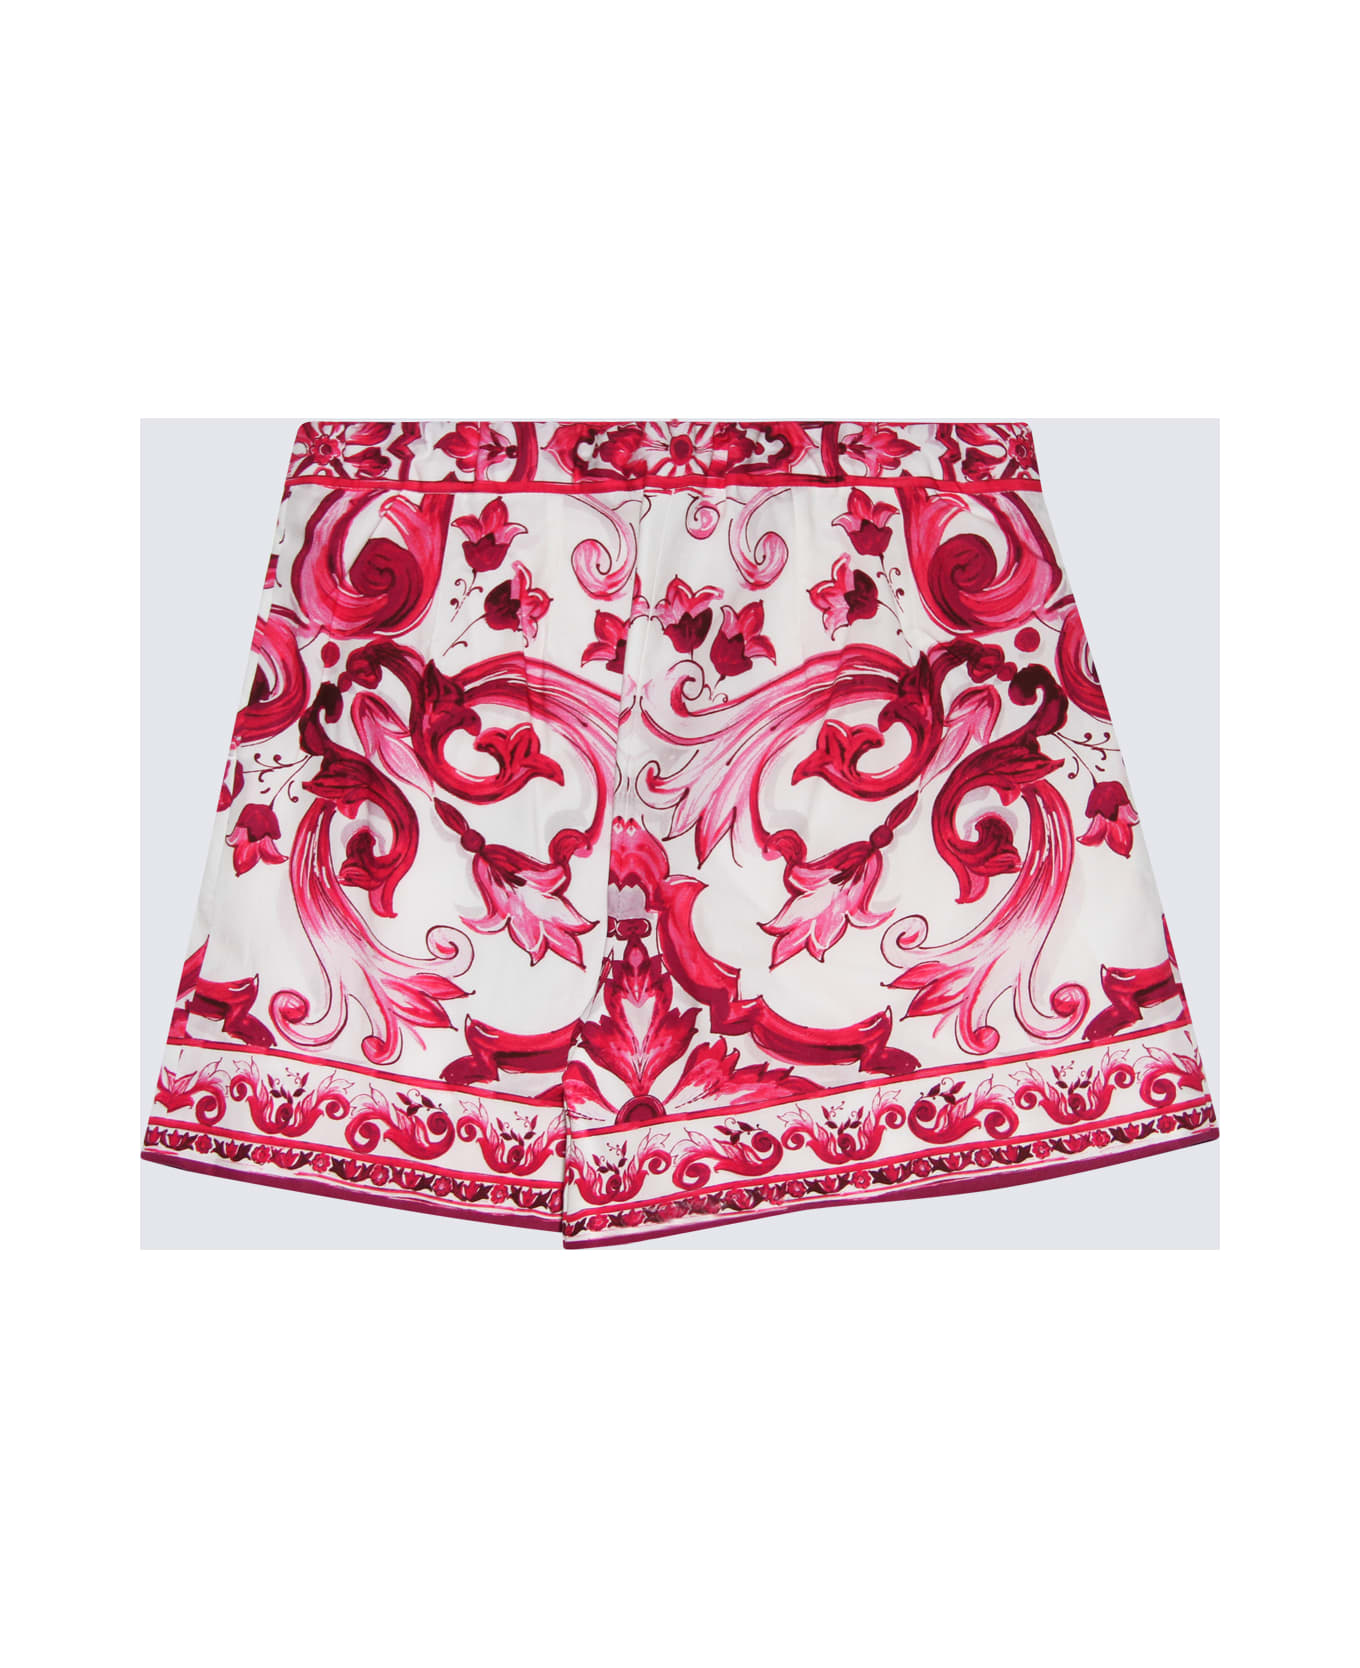 Dolce & Gabbana Maioliche Fuchsia Cotton Shorts - MAIOLICHE FUXIA